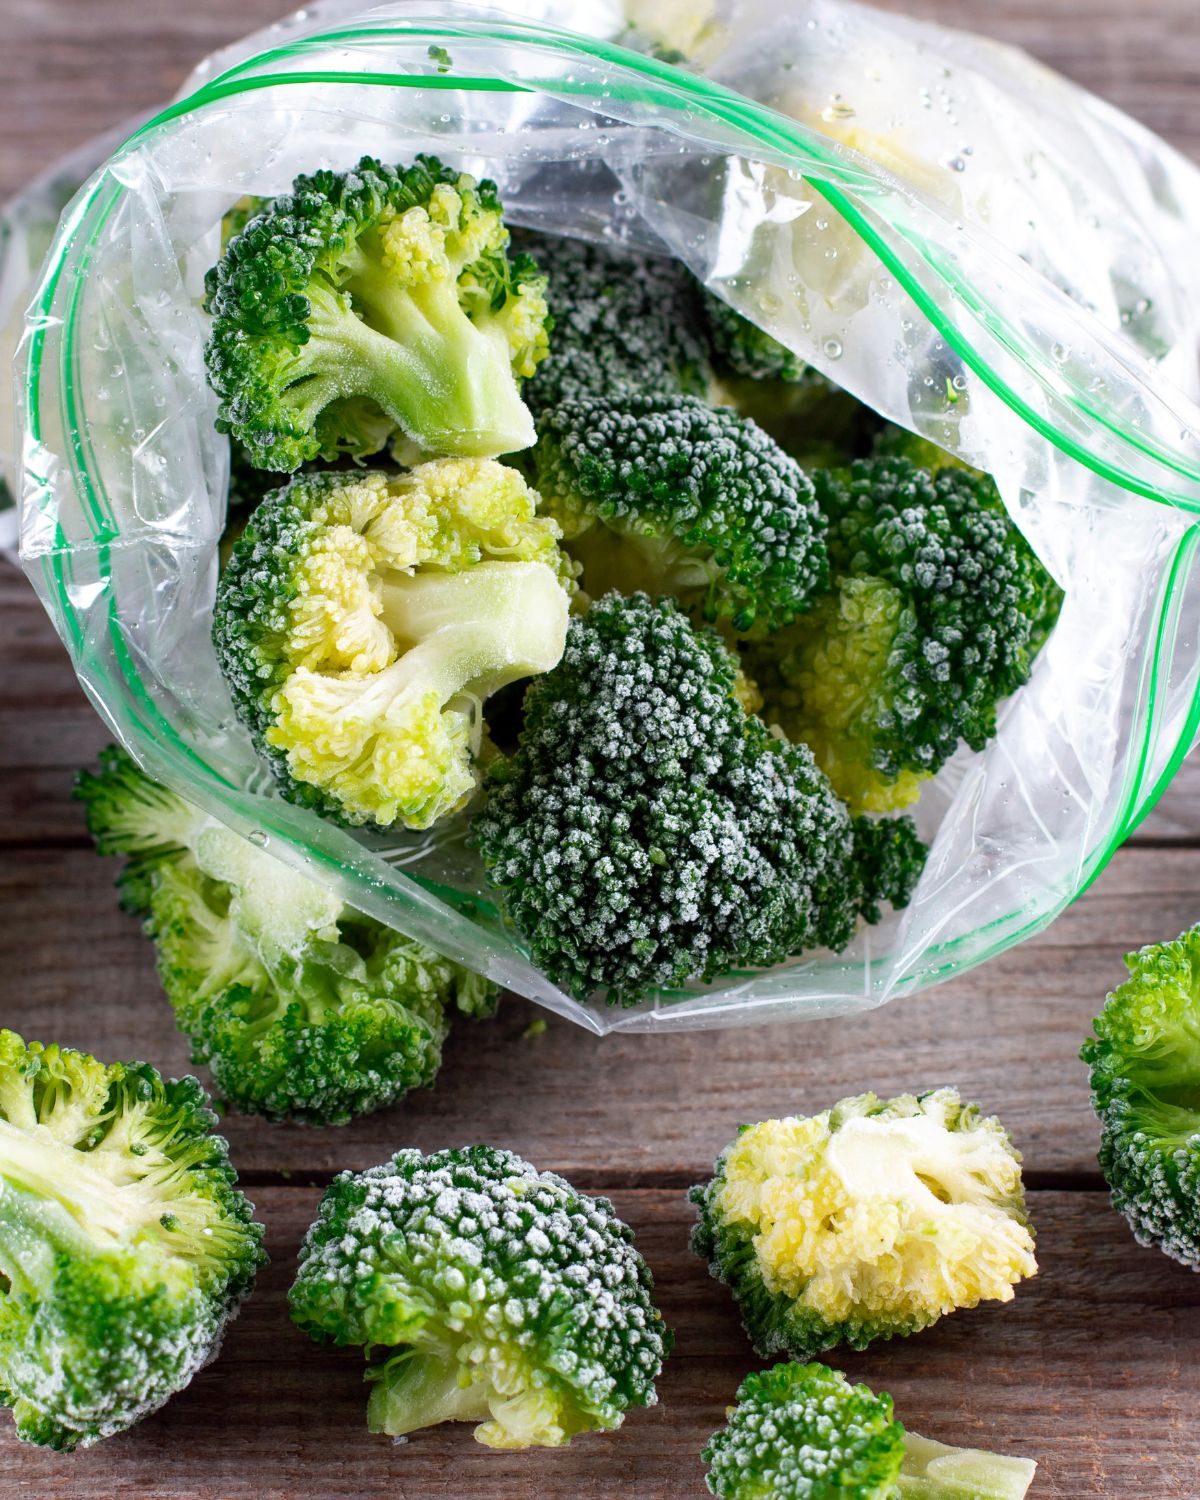 Frozen broccoli in a bag.